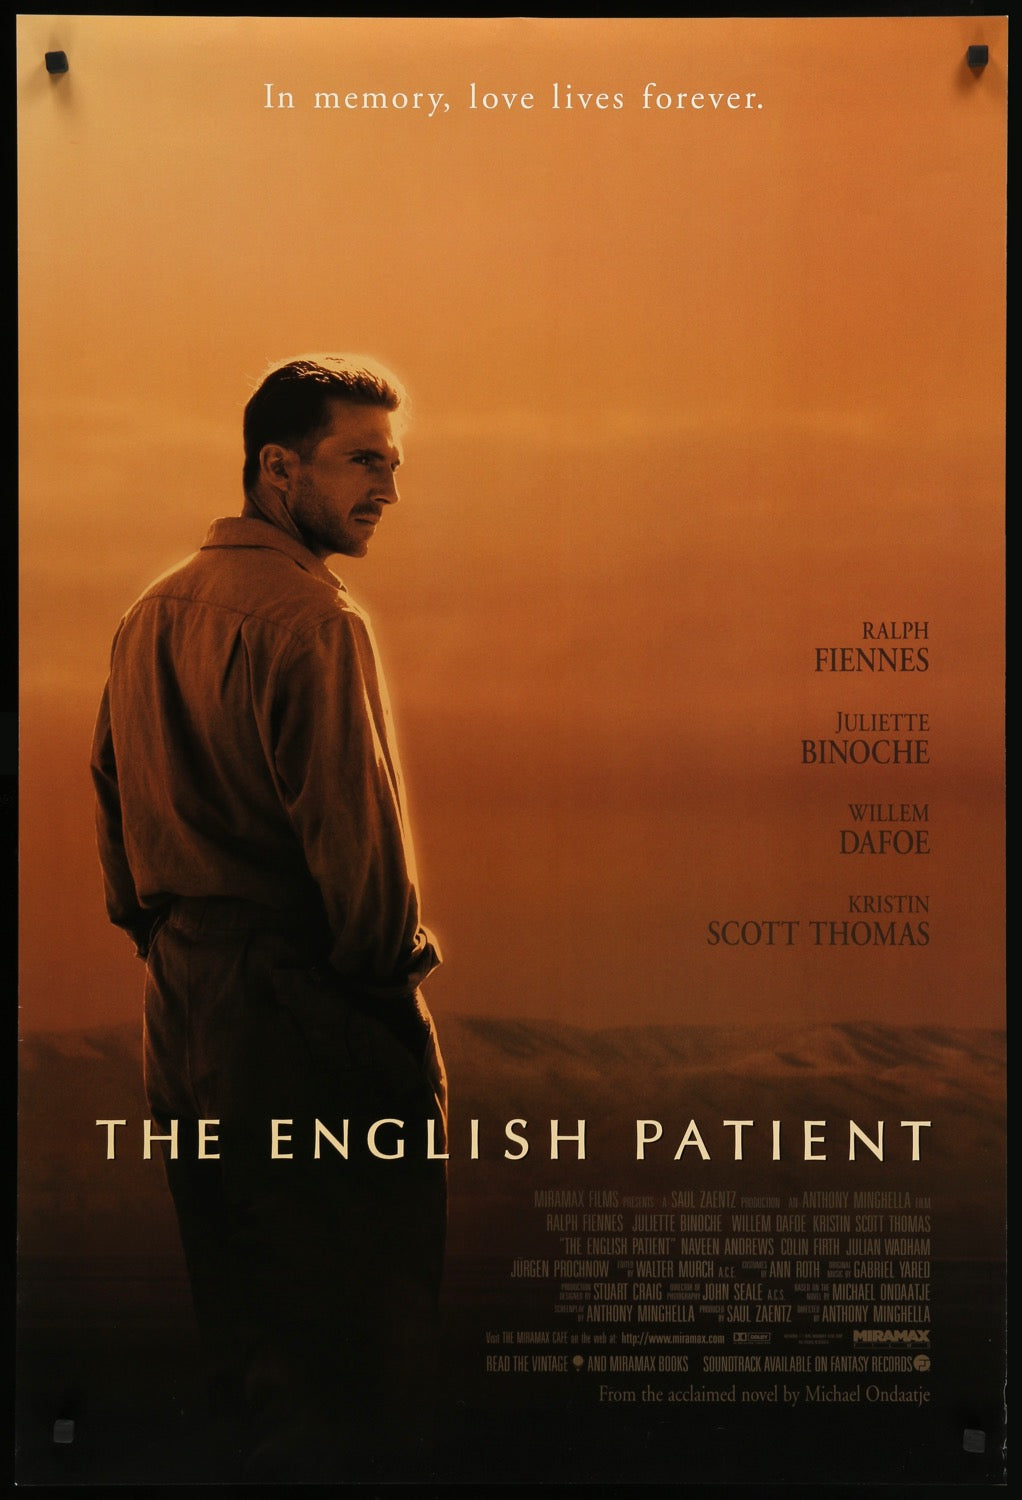 English Patient (1996) original movie poster for sale at Original Film Art